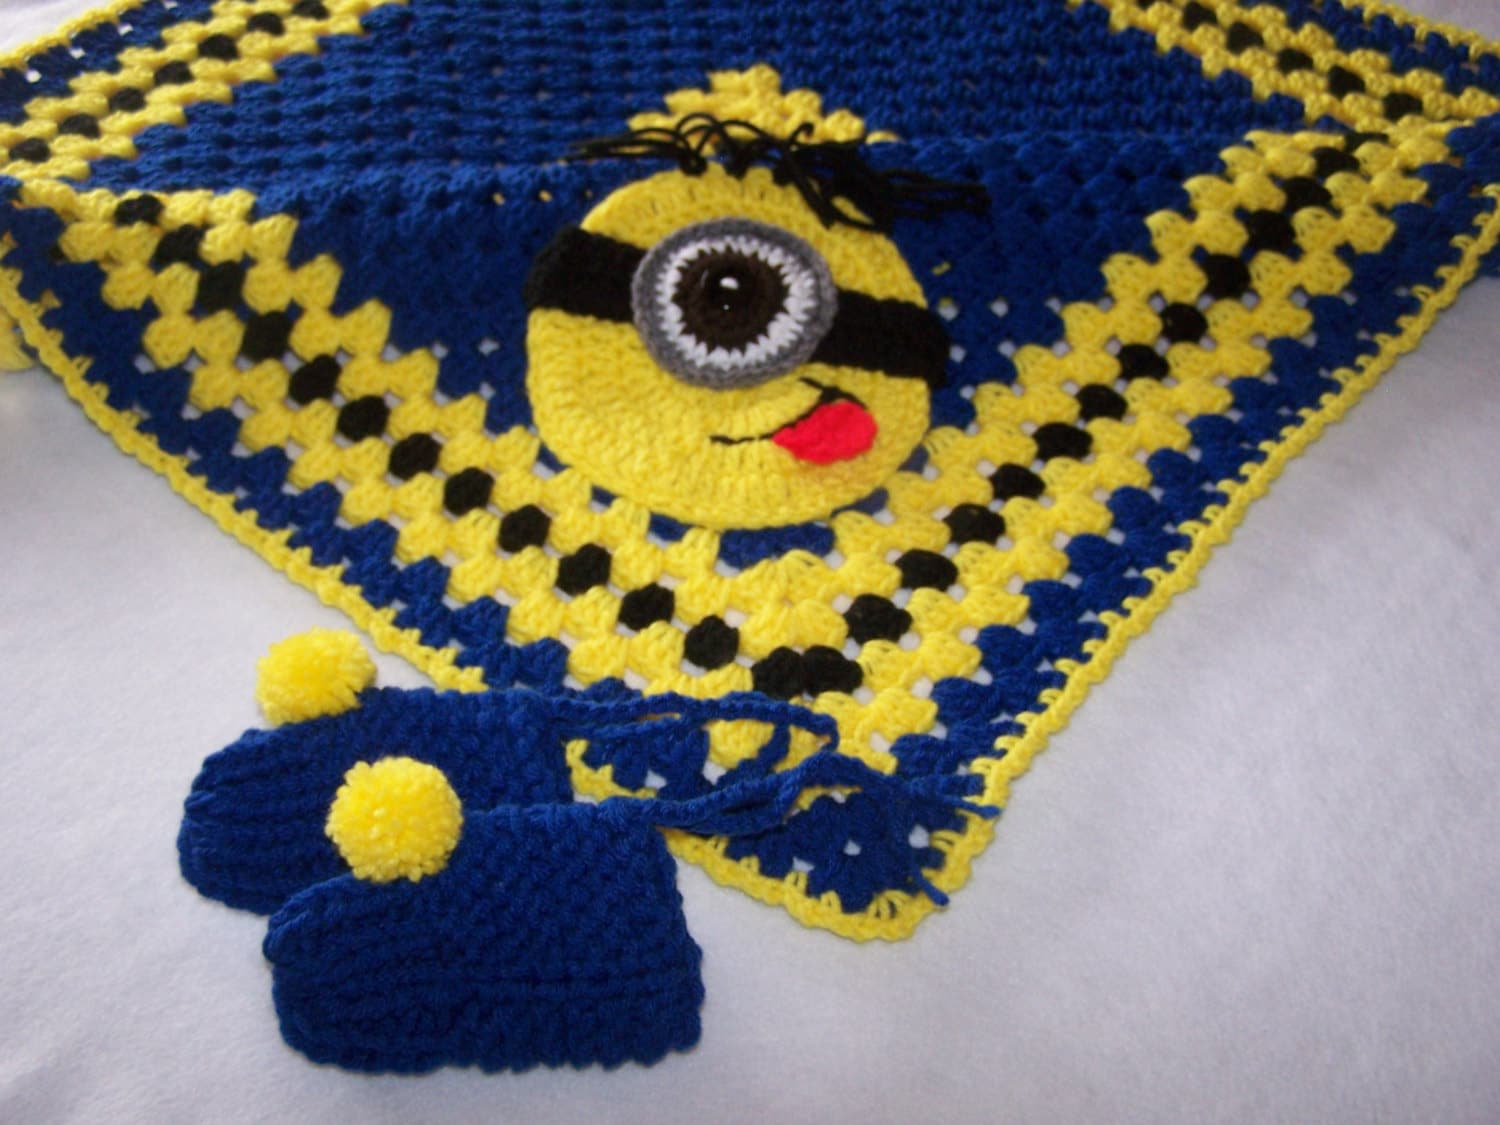 minion blanket baby crochet pattern Square plus Granny Crocheted Blanket/ Baby Afghan Minion Hand